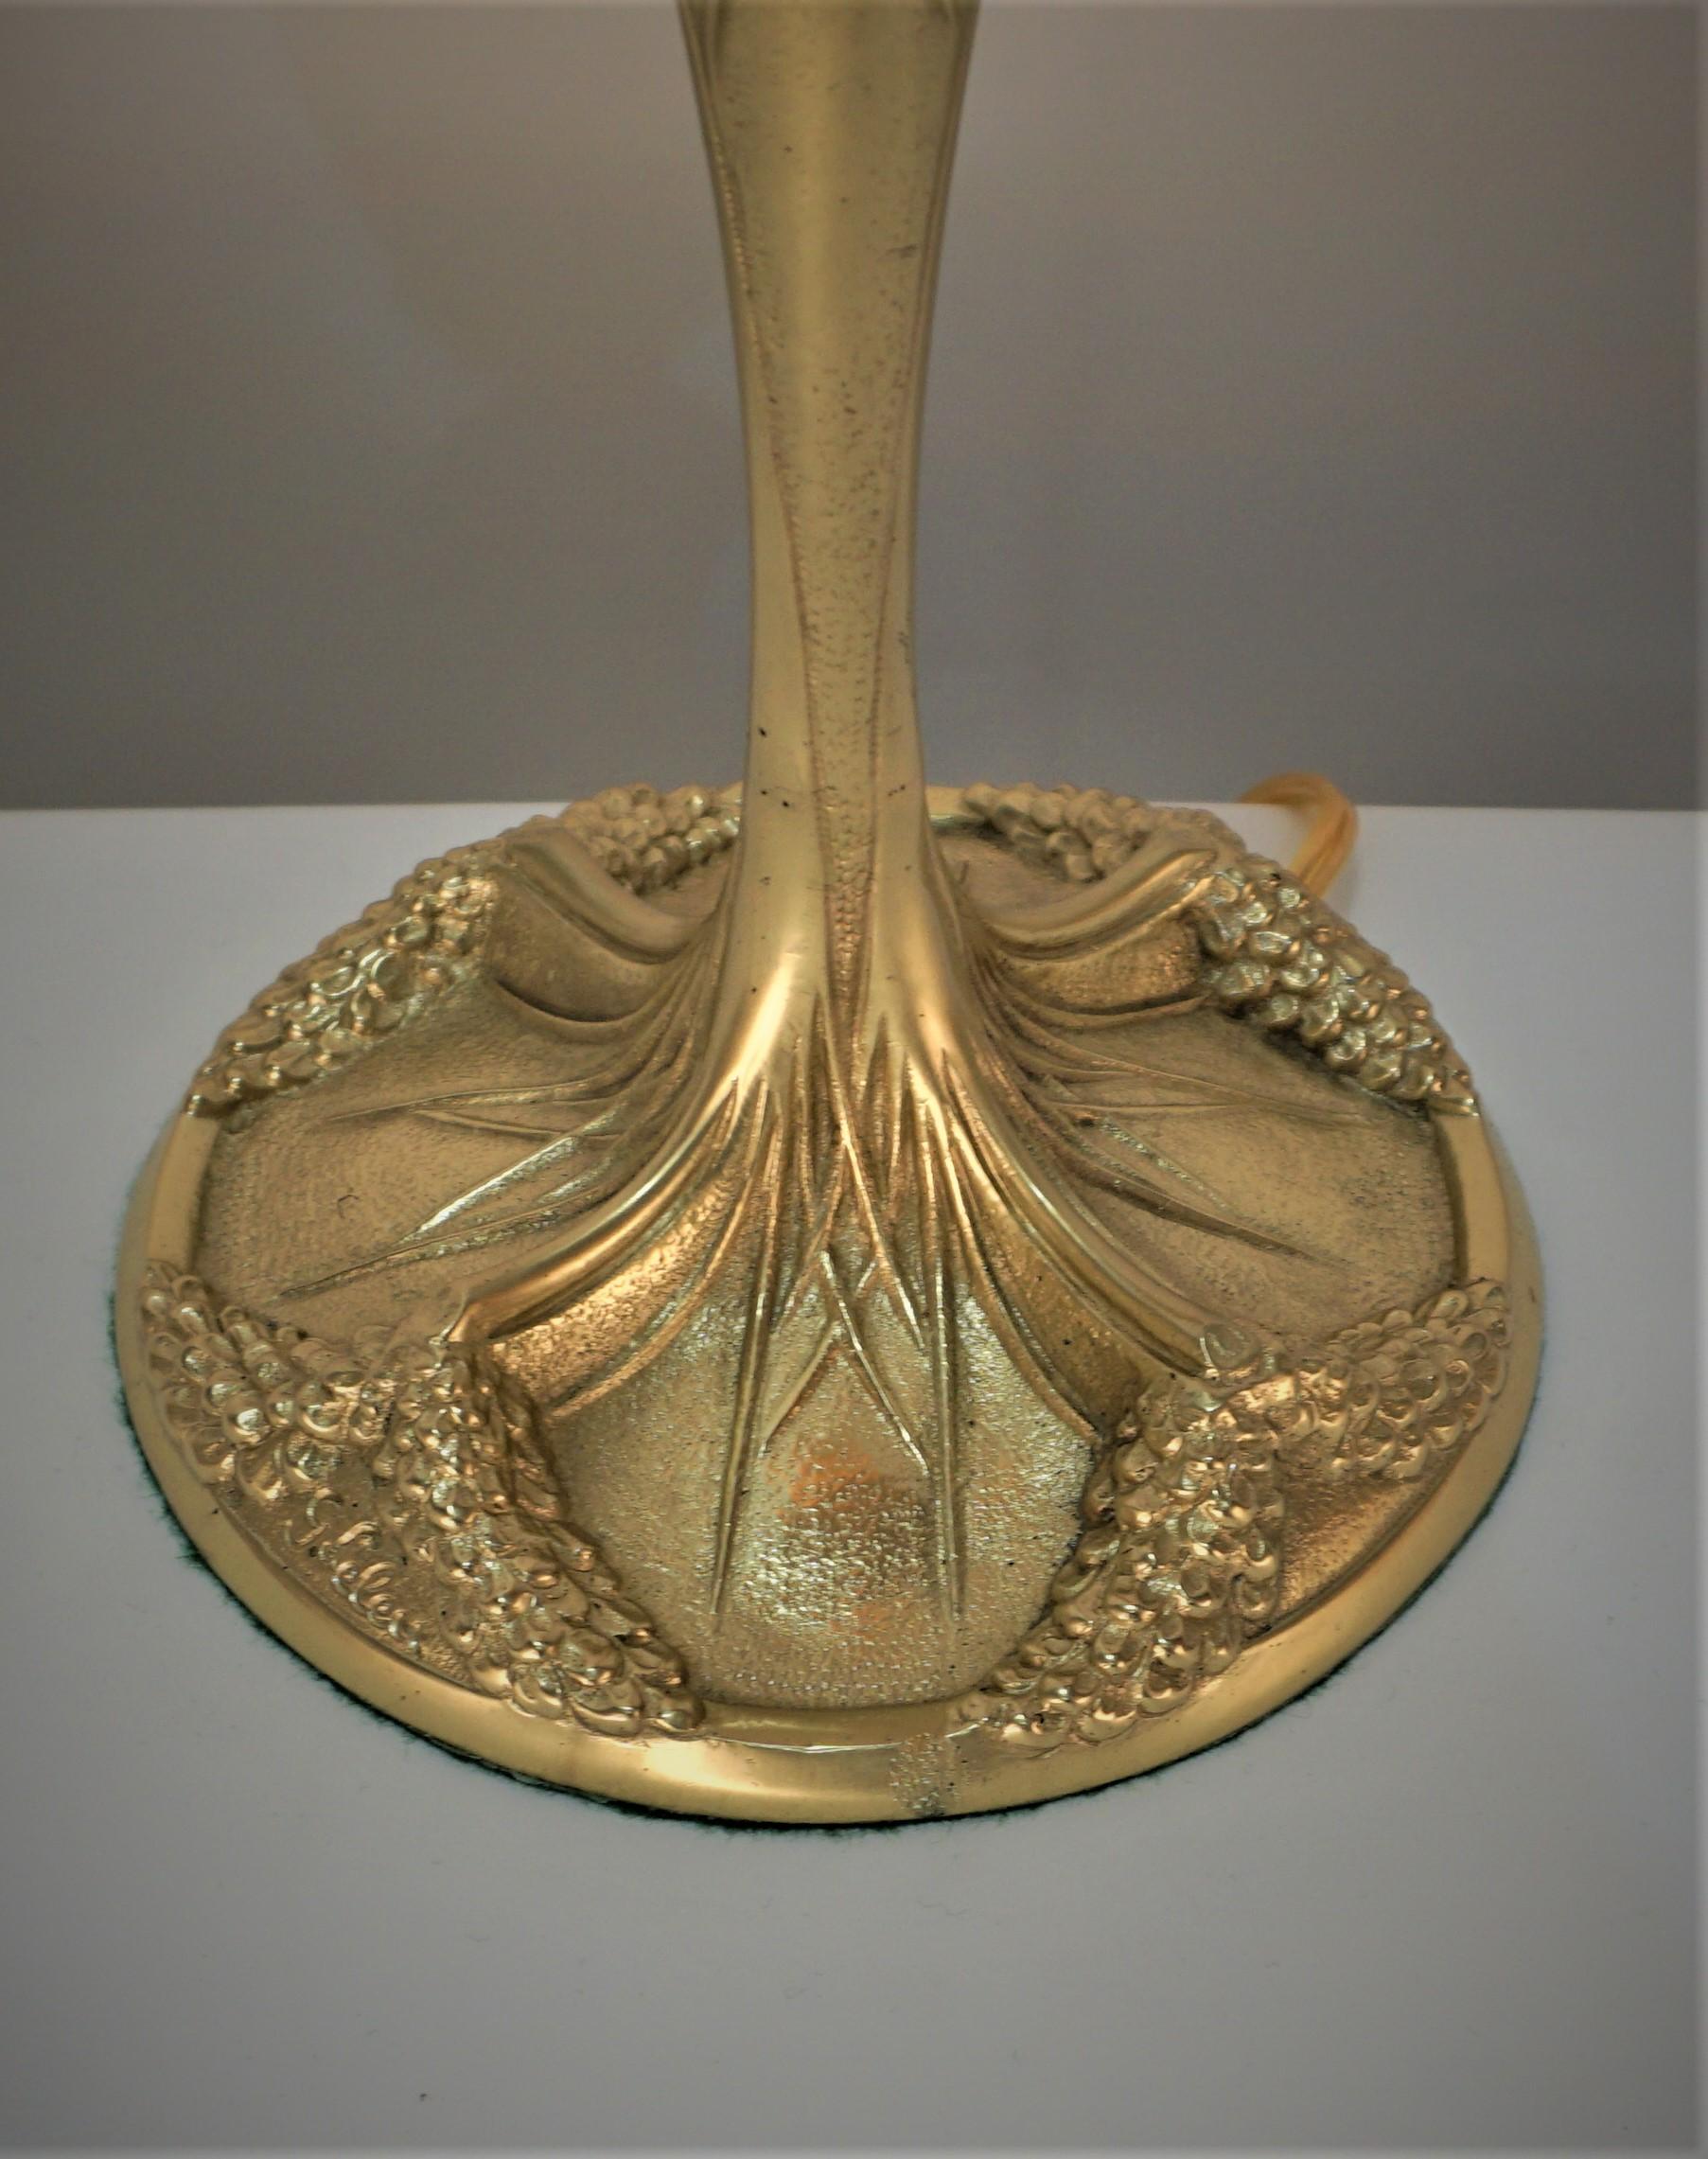 Beautiful bronze Goerges Leleu art nouveau table lamp with blown glass art glass shade by Daum Nancy.